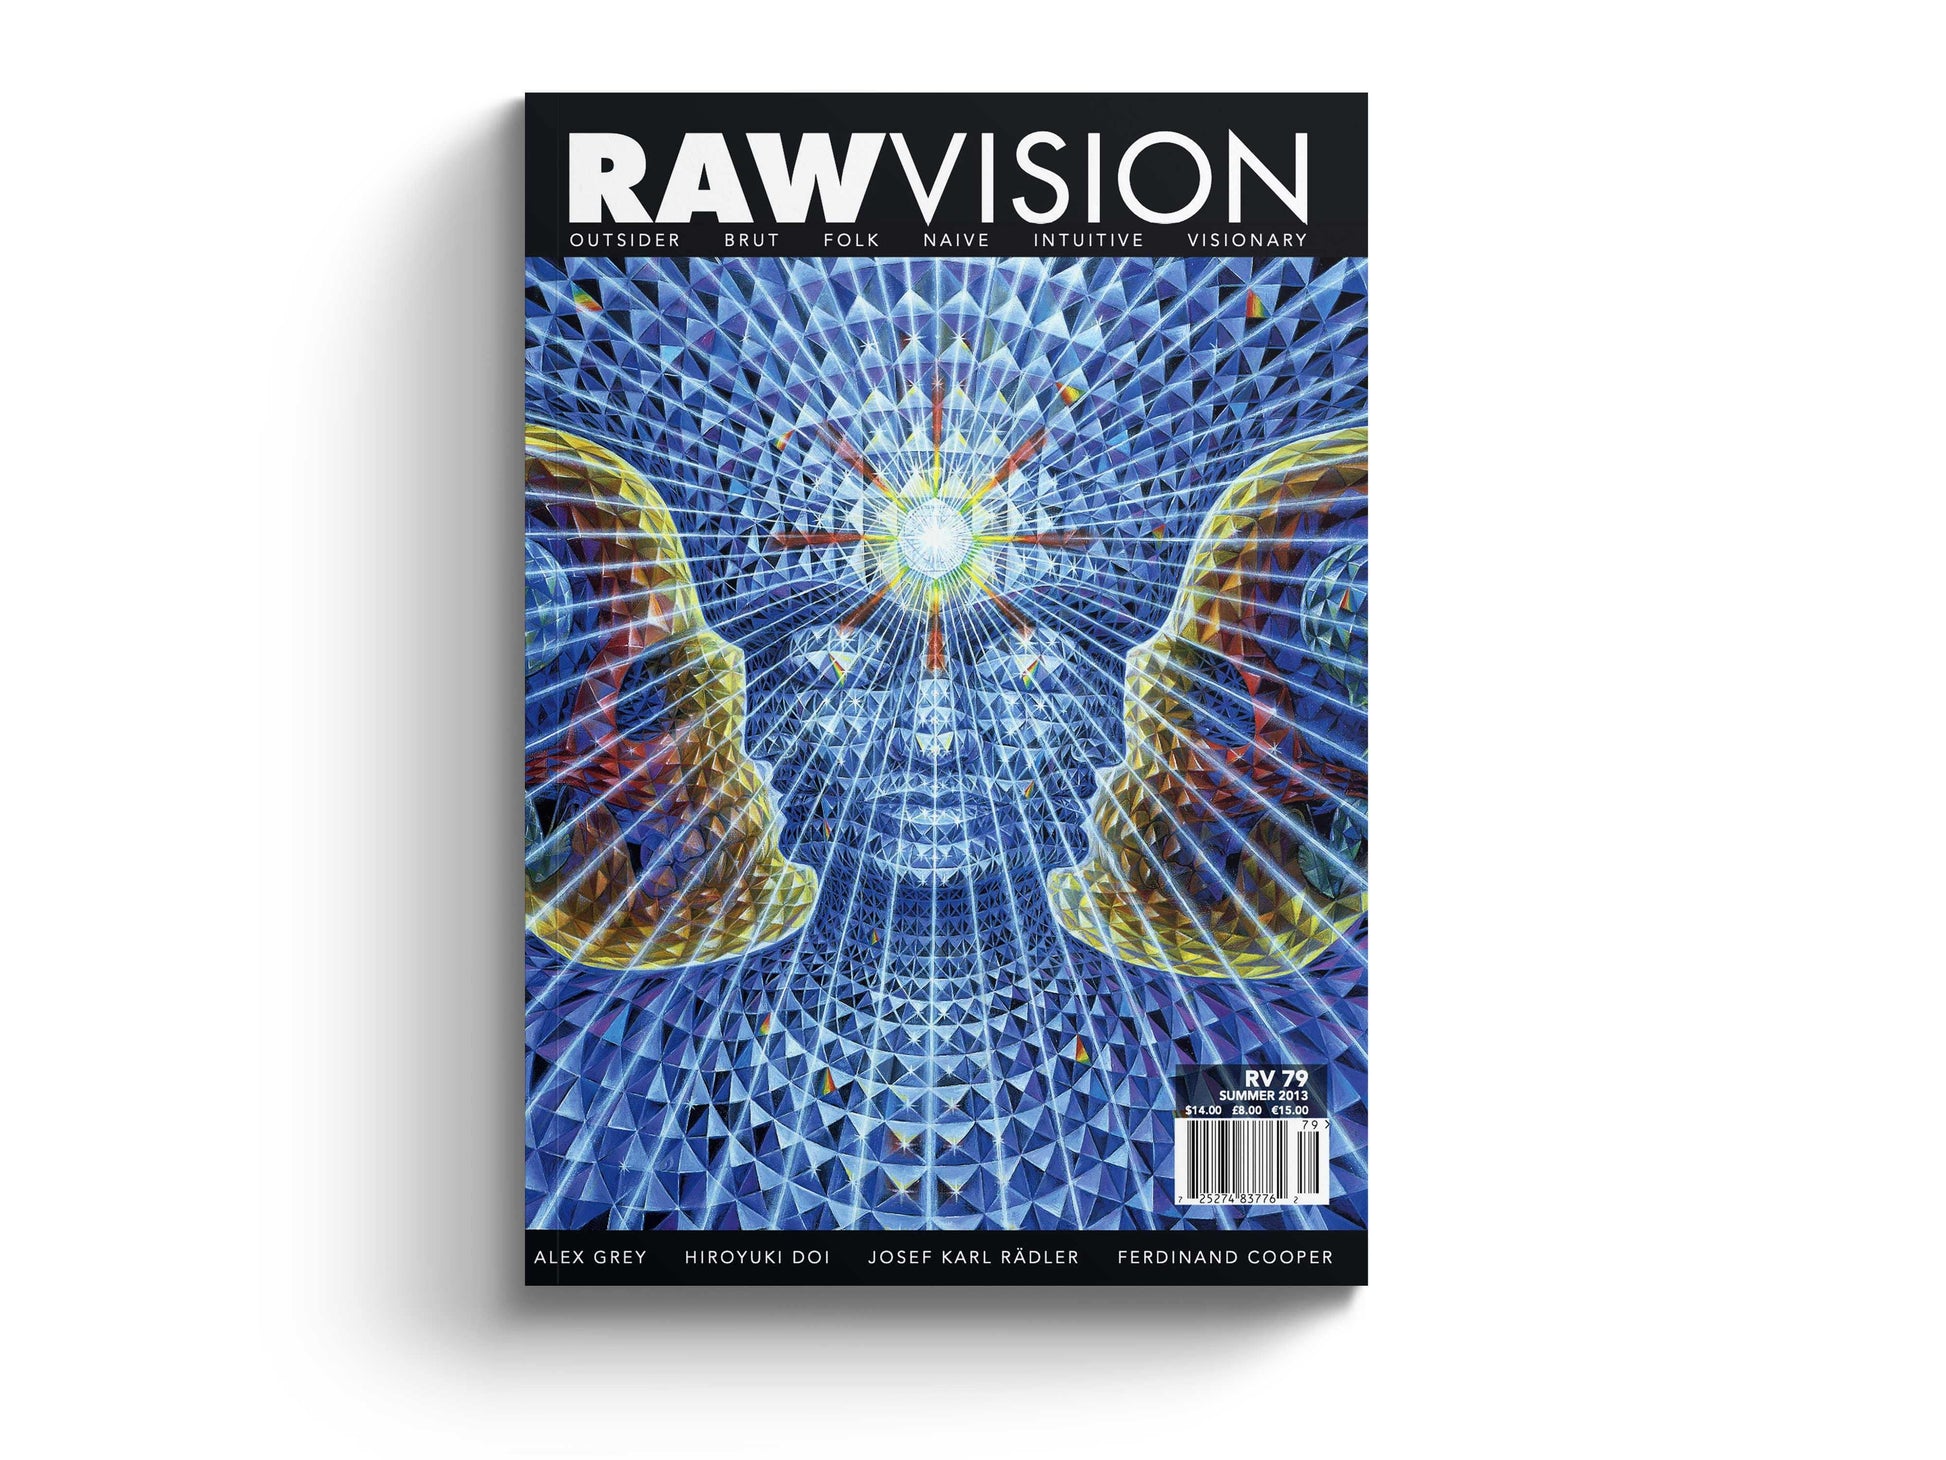 Raw Vision Magazine Issue #79